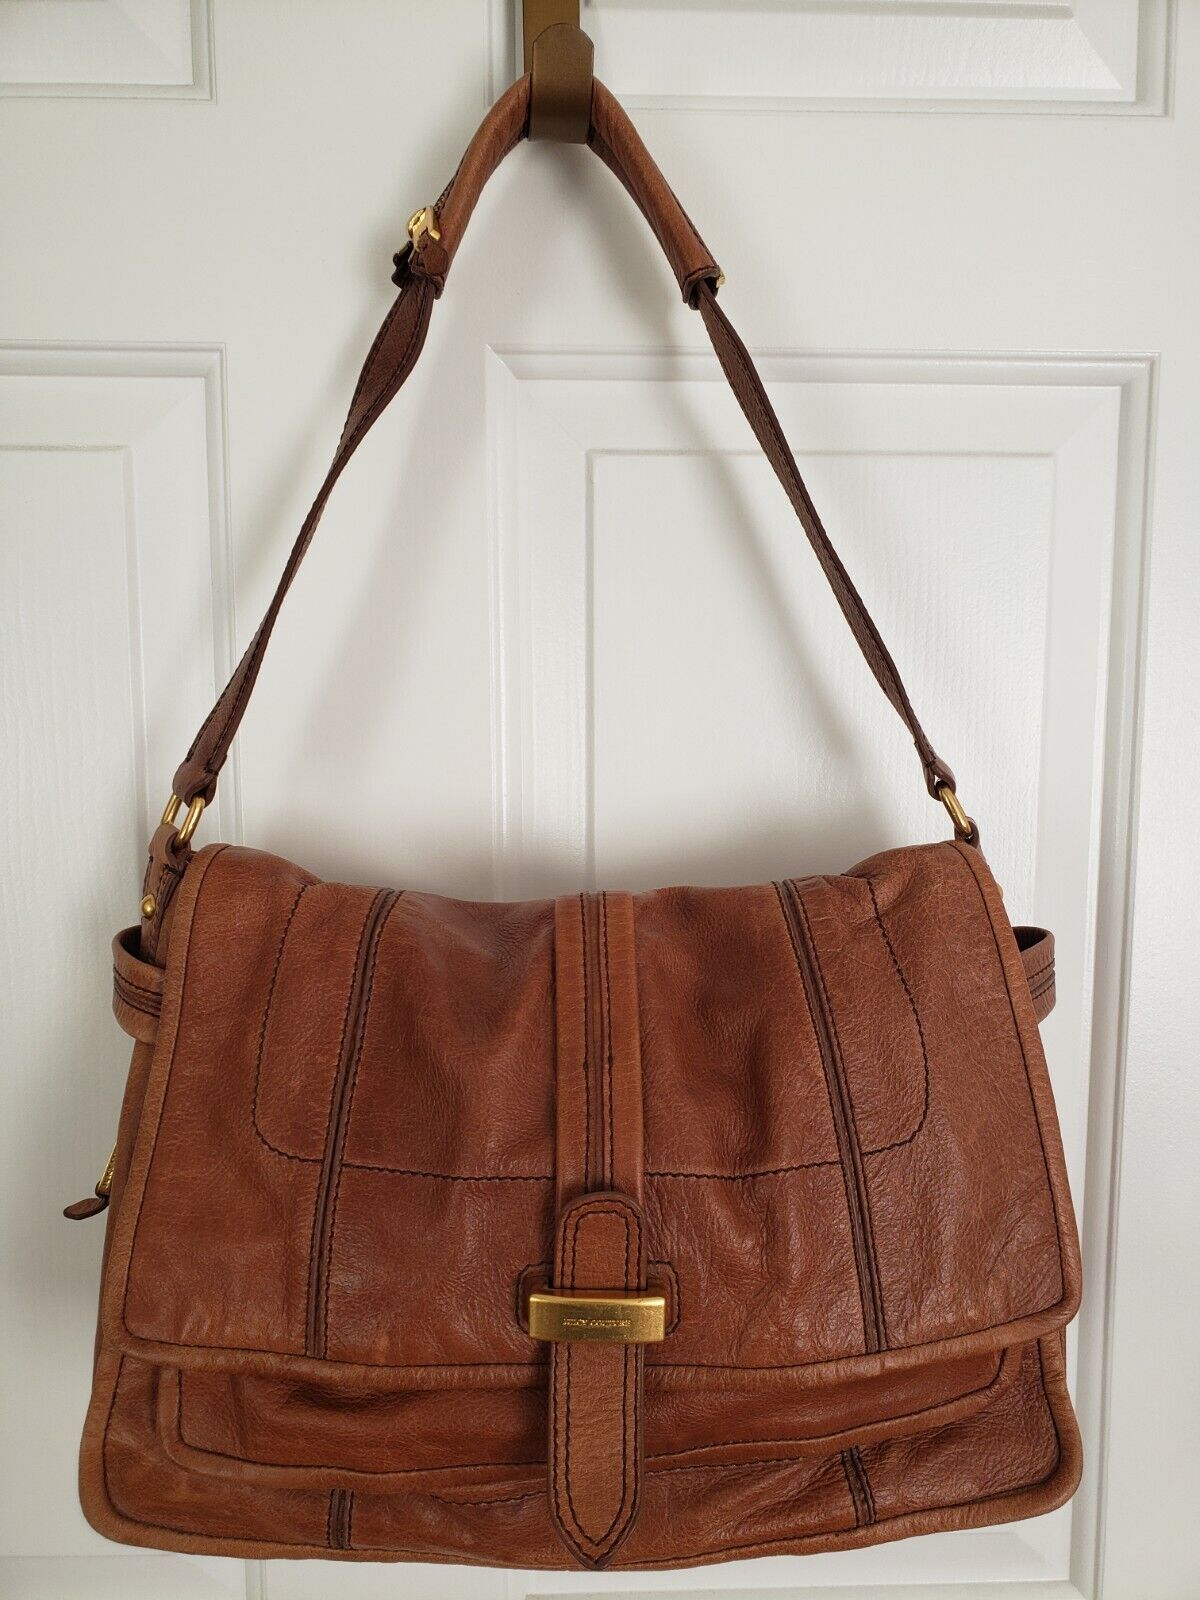 juicy couture leather brown vintage bag - image 1